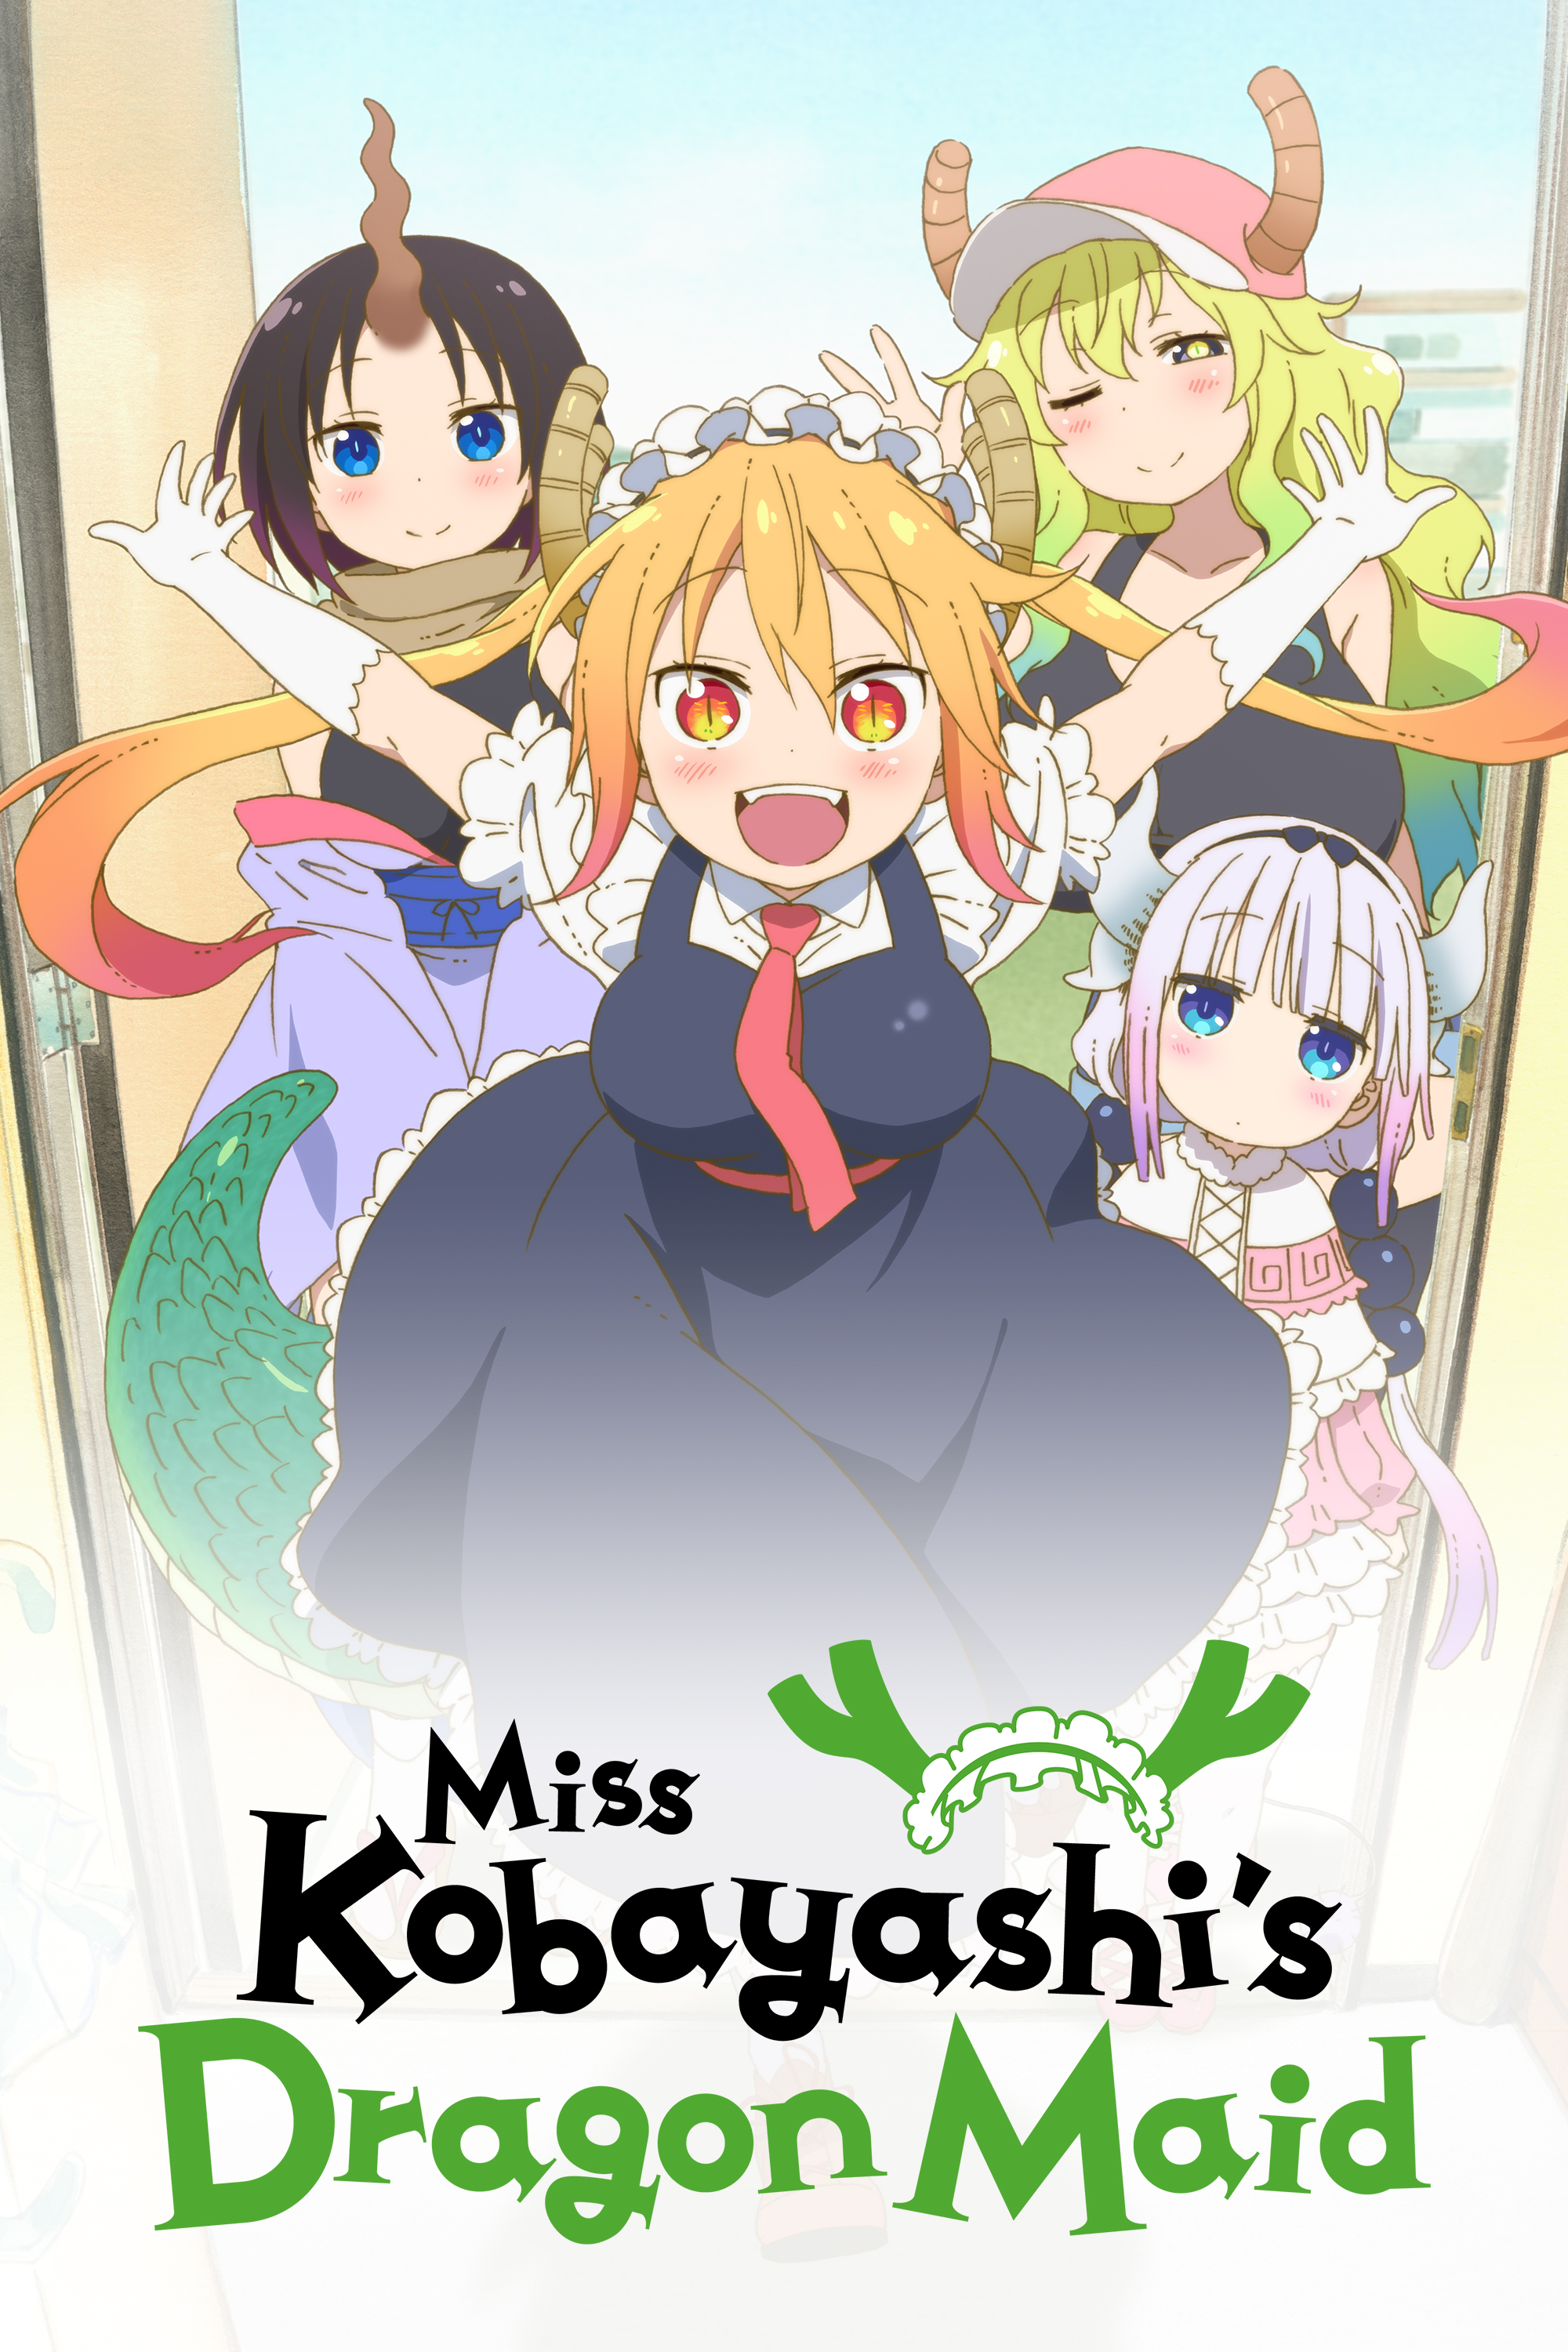 Miss Kobayashis Dragon Maid  Wikipedia